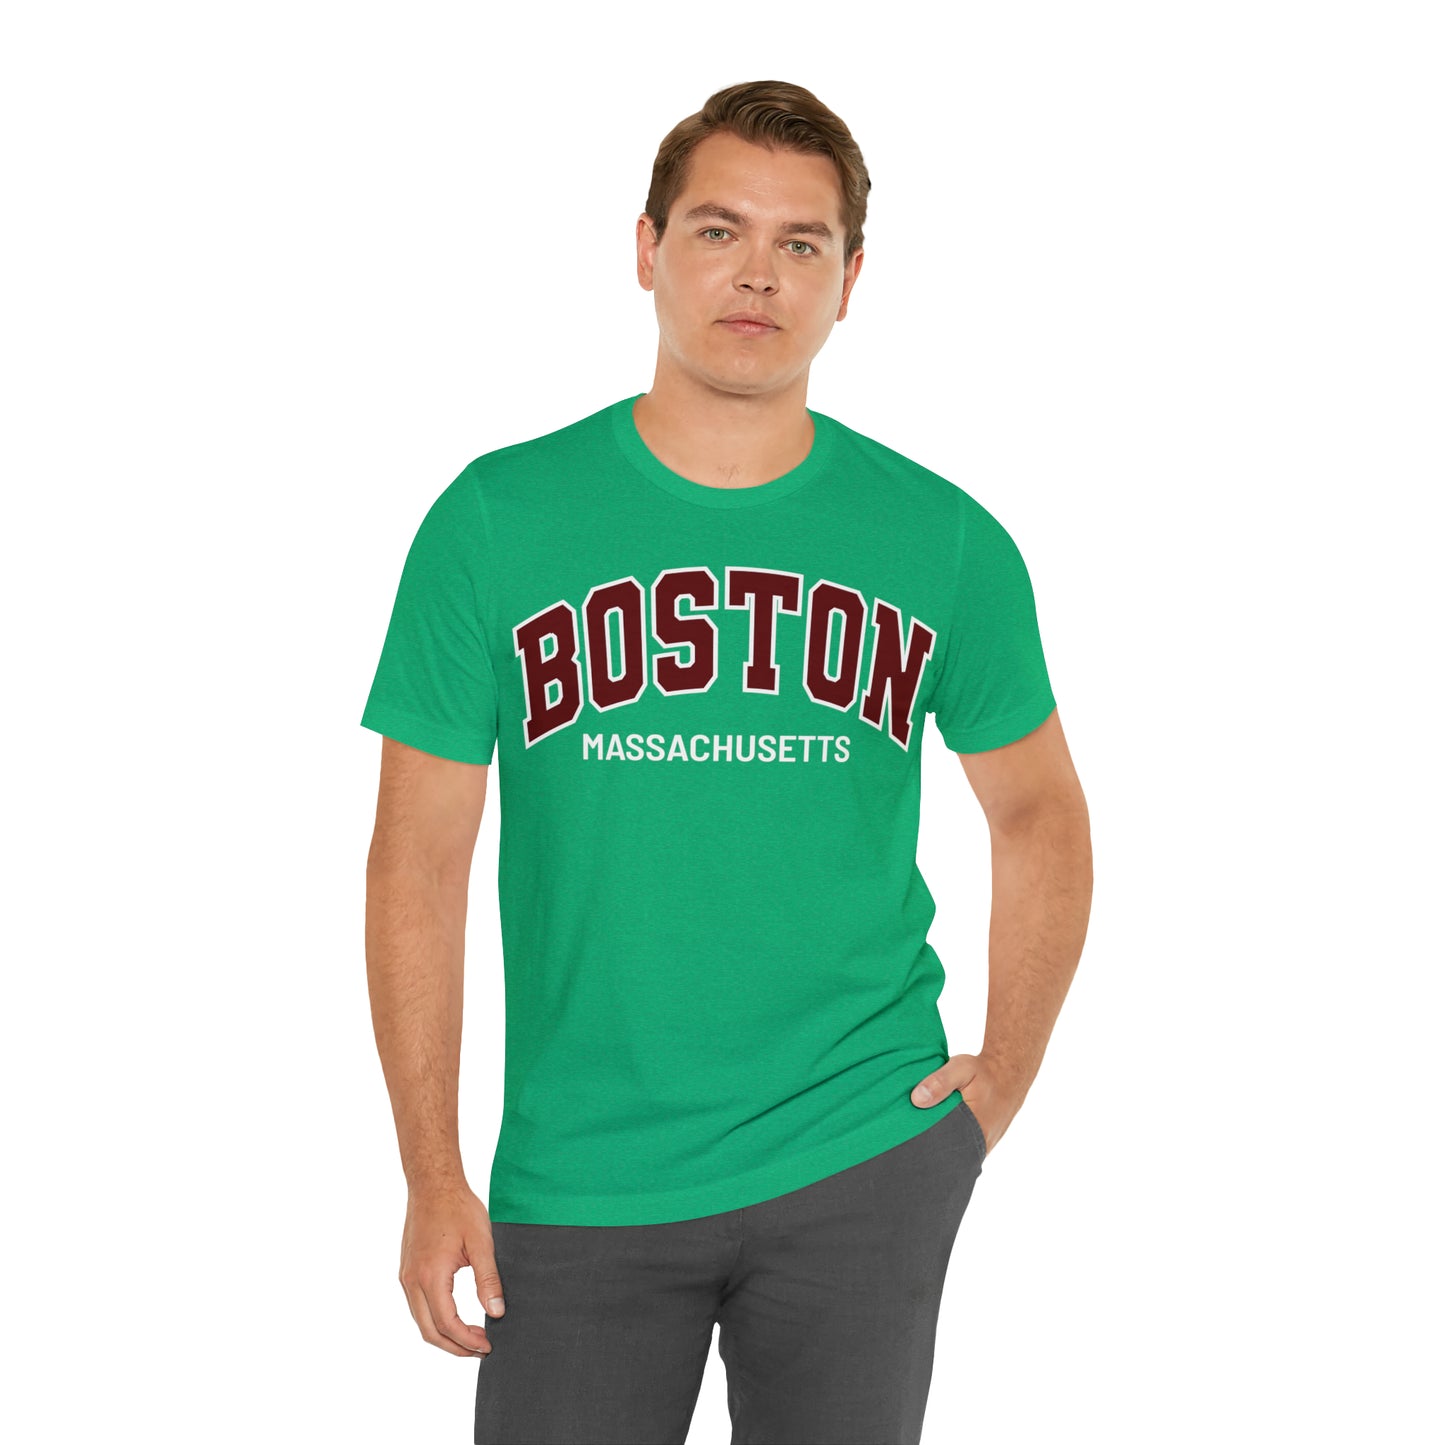 Boston Tshirt, Vintage Graphic Tee - Get the best Boston Souvenir with this iconic Boston graphic Tee